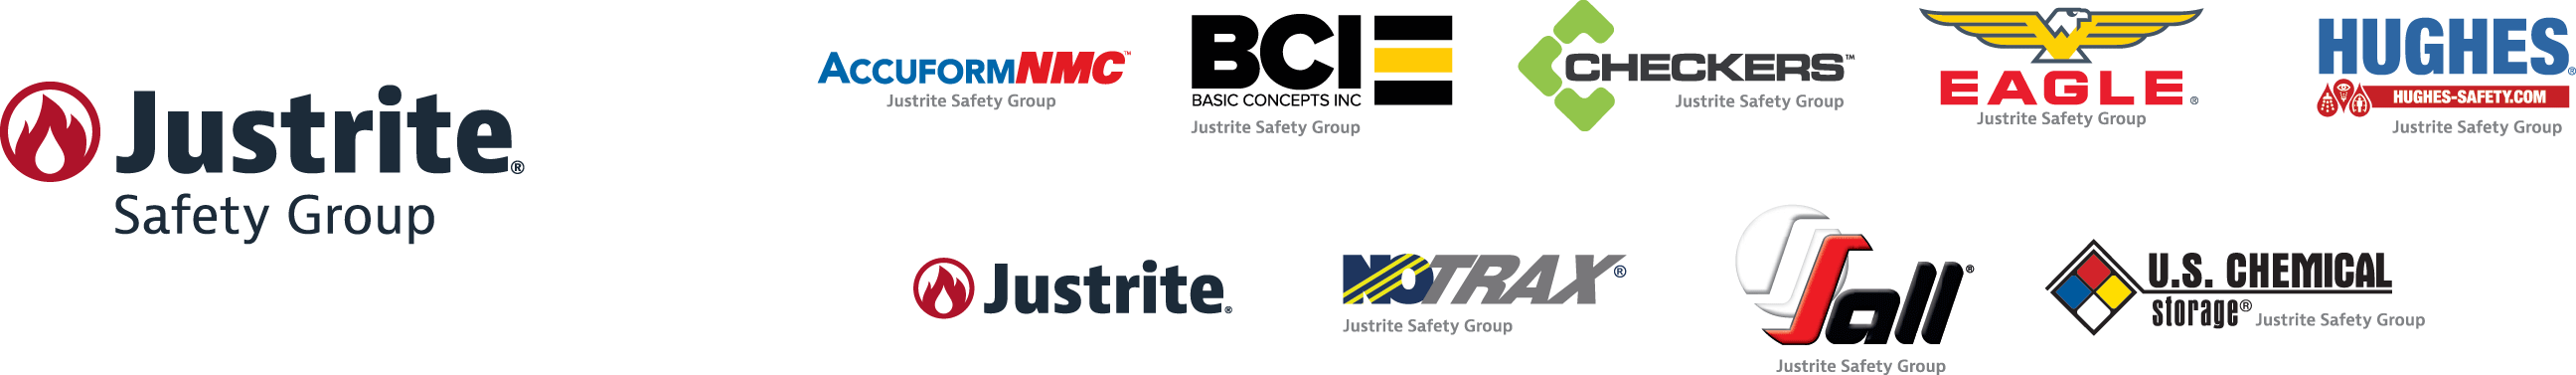 Justrite Safety Group Brand Logos